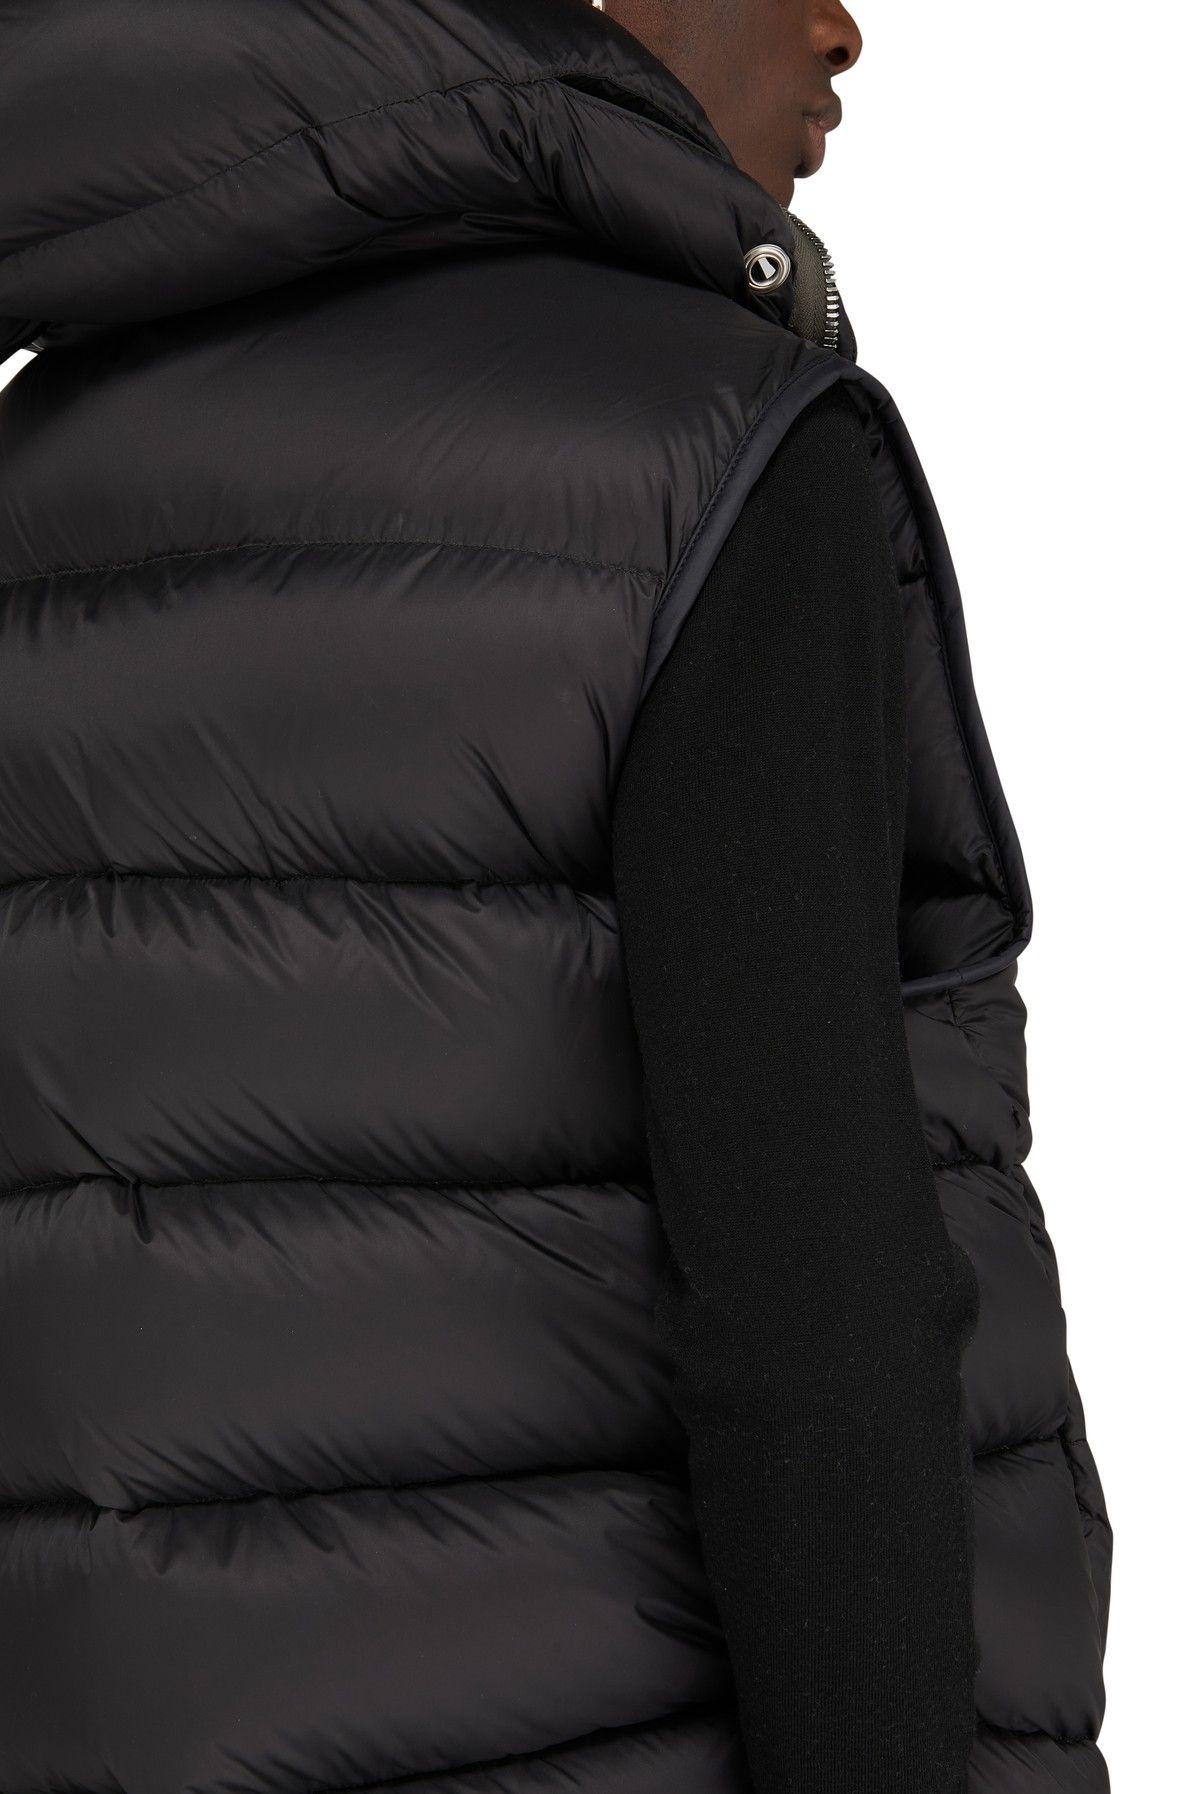 Rick Owens Gimp Puffer Jacket in Black for Men | Lyst